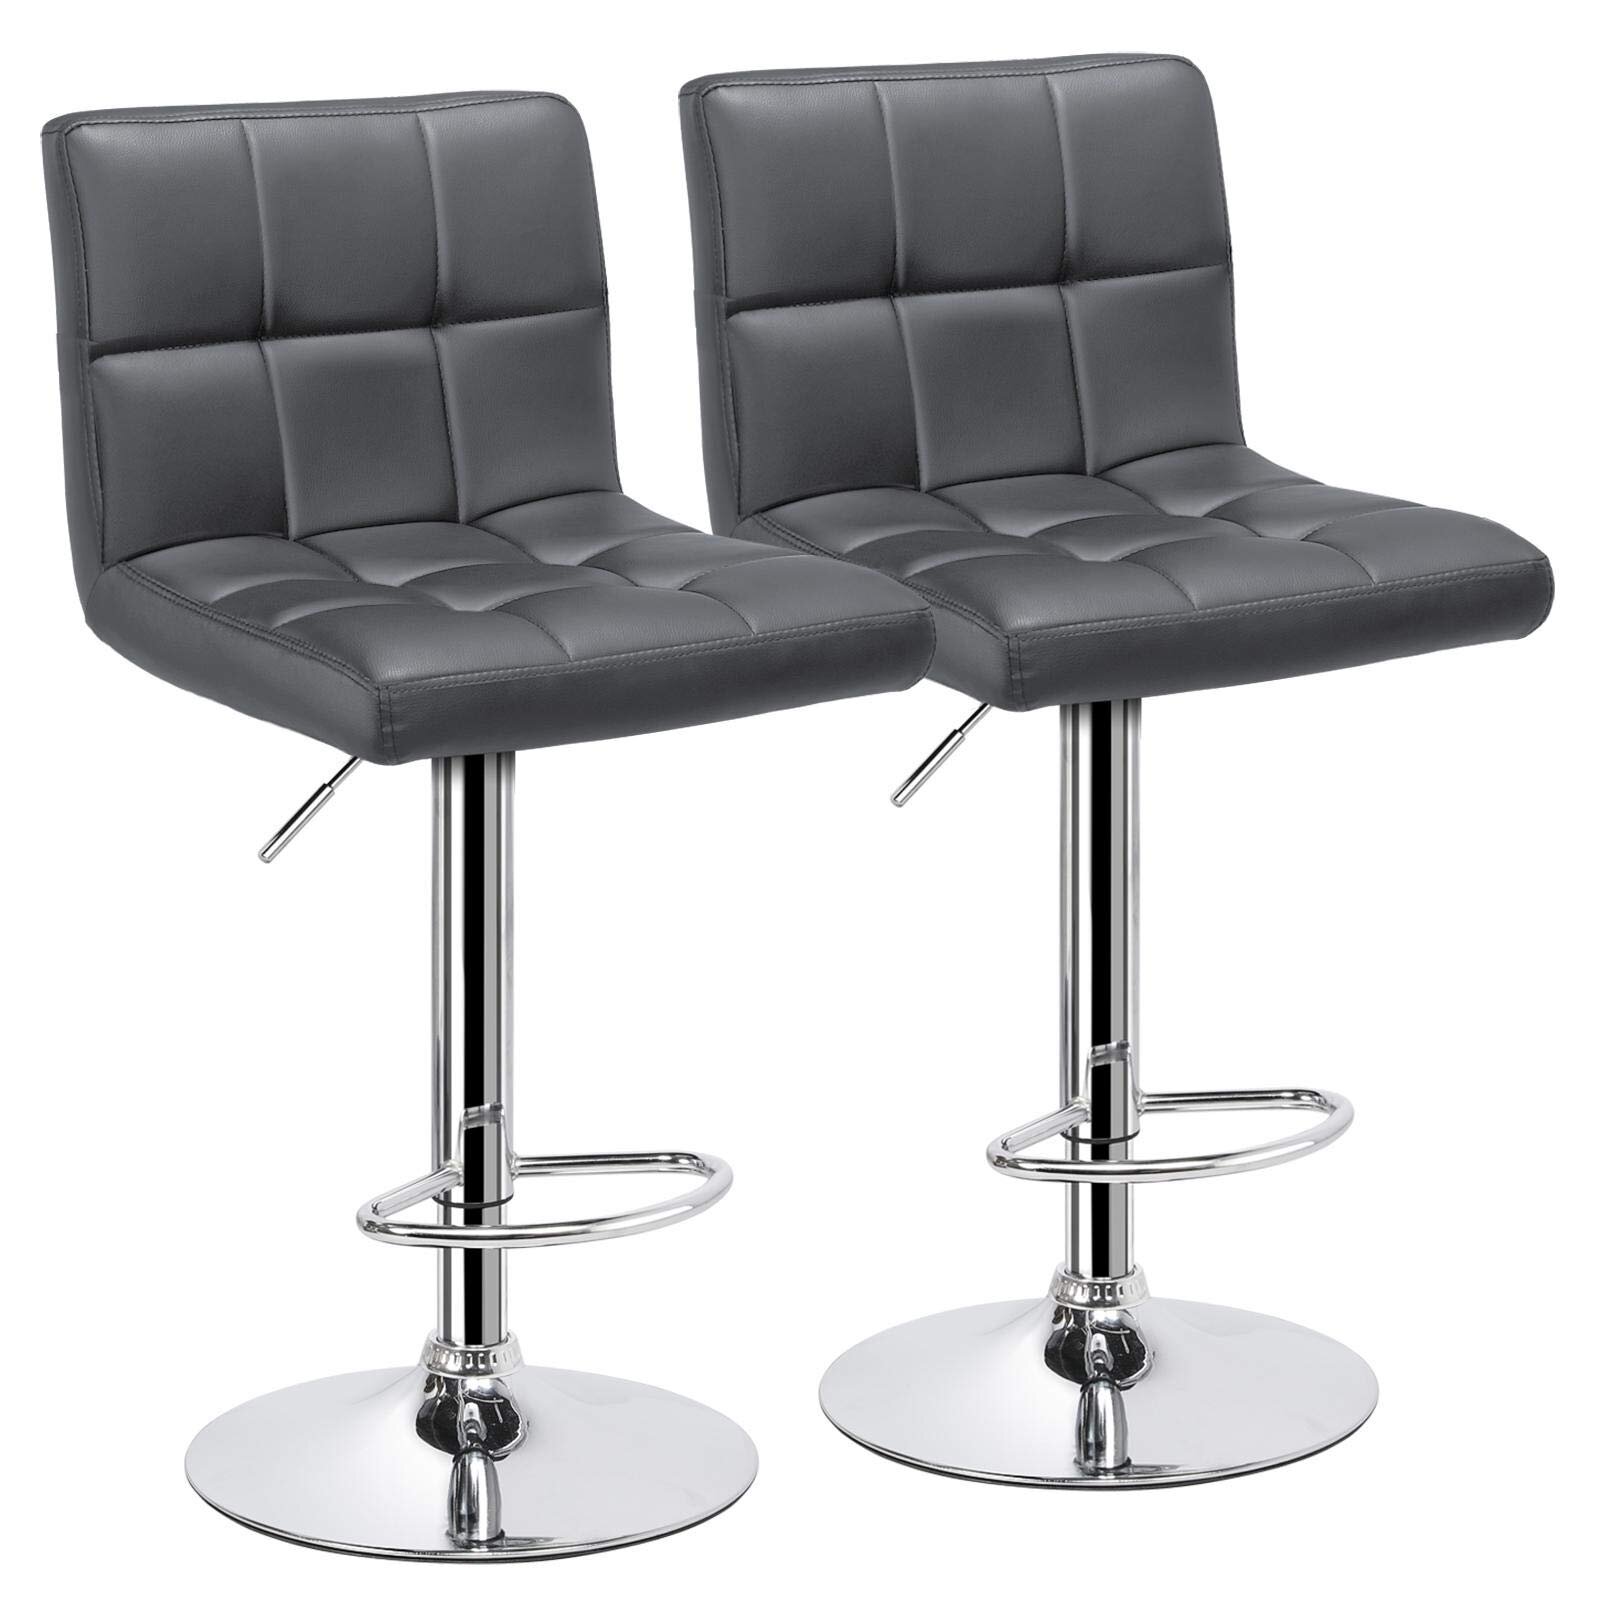 2Pcs Round PU Leather Seats Adjustable Hydraulic Swivel Bar Stools Dining Chairs 